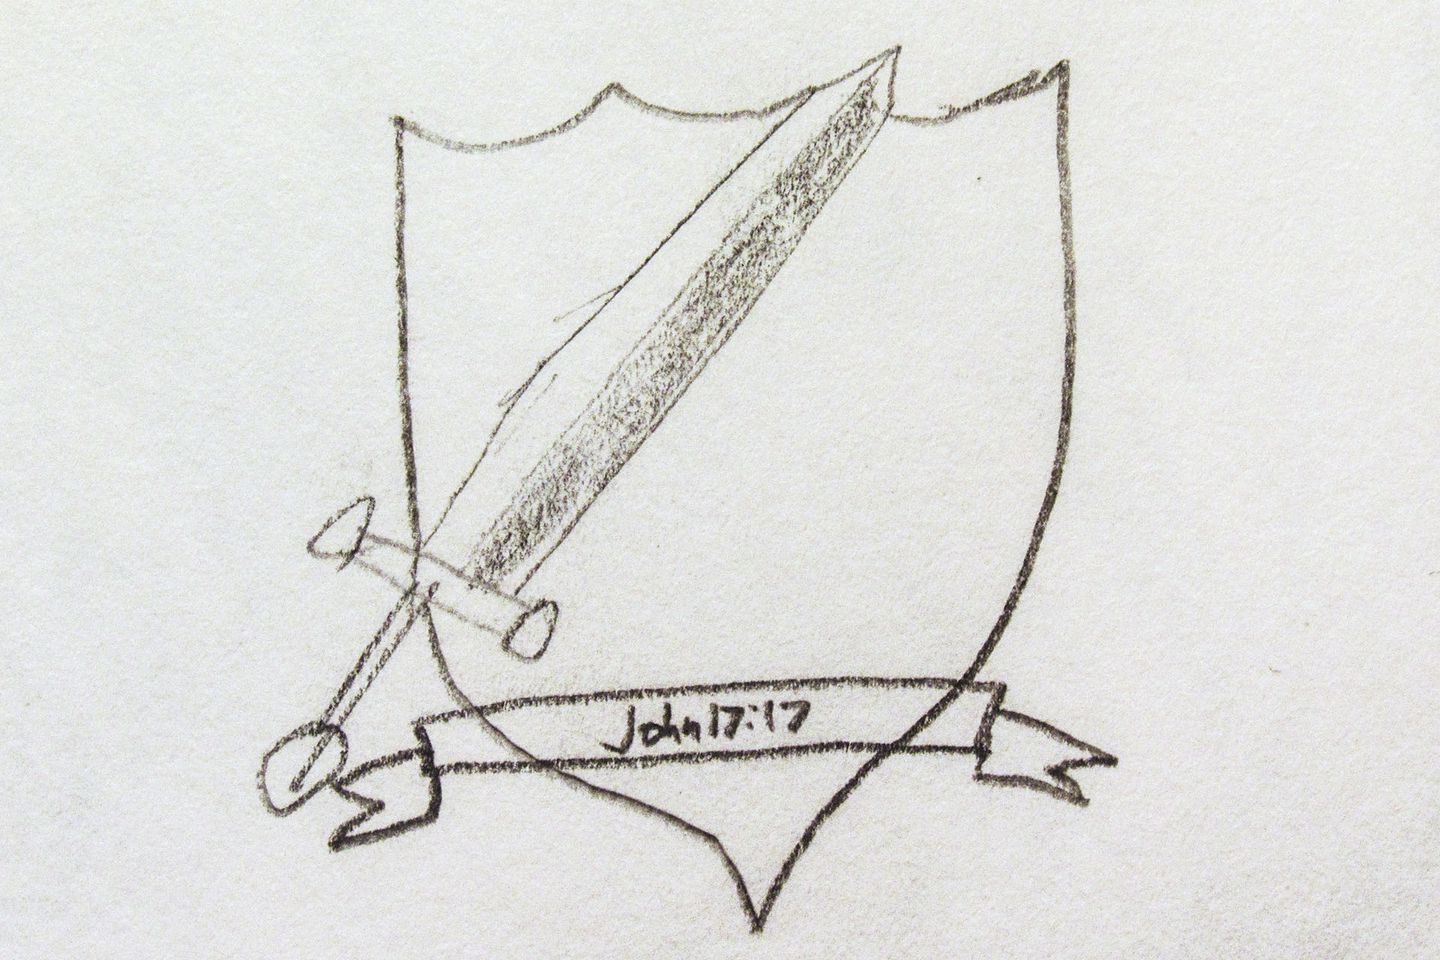 An initial sketch of the TeachingTheWord logo.